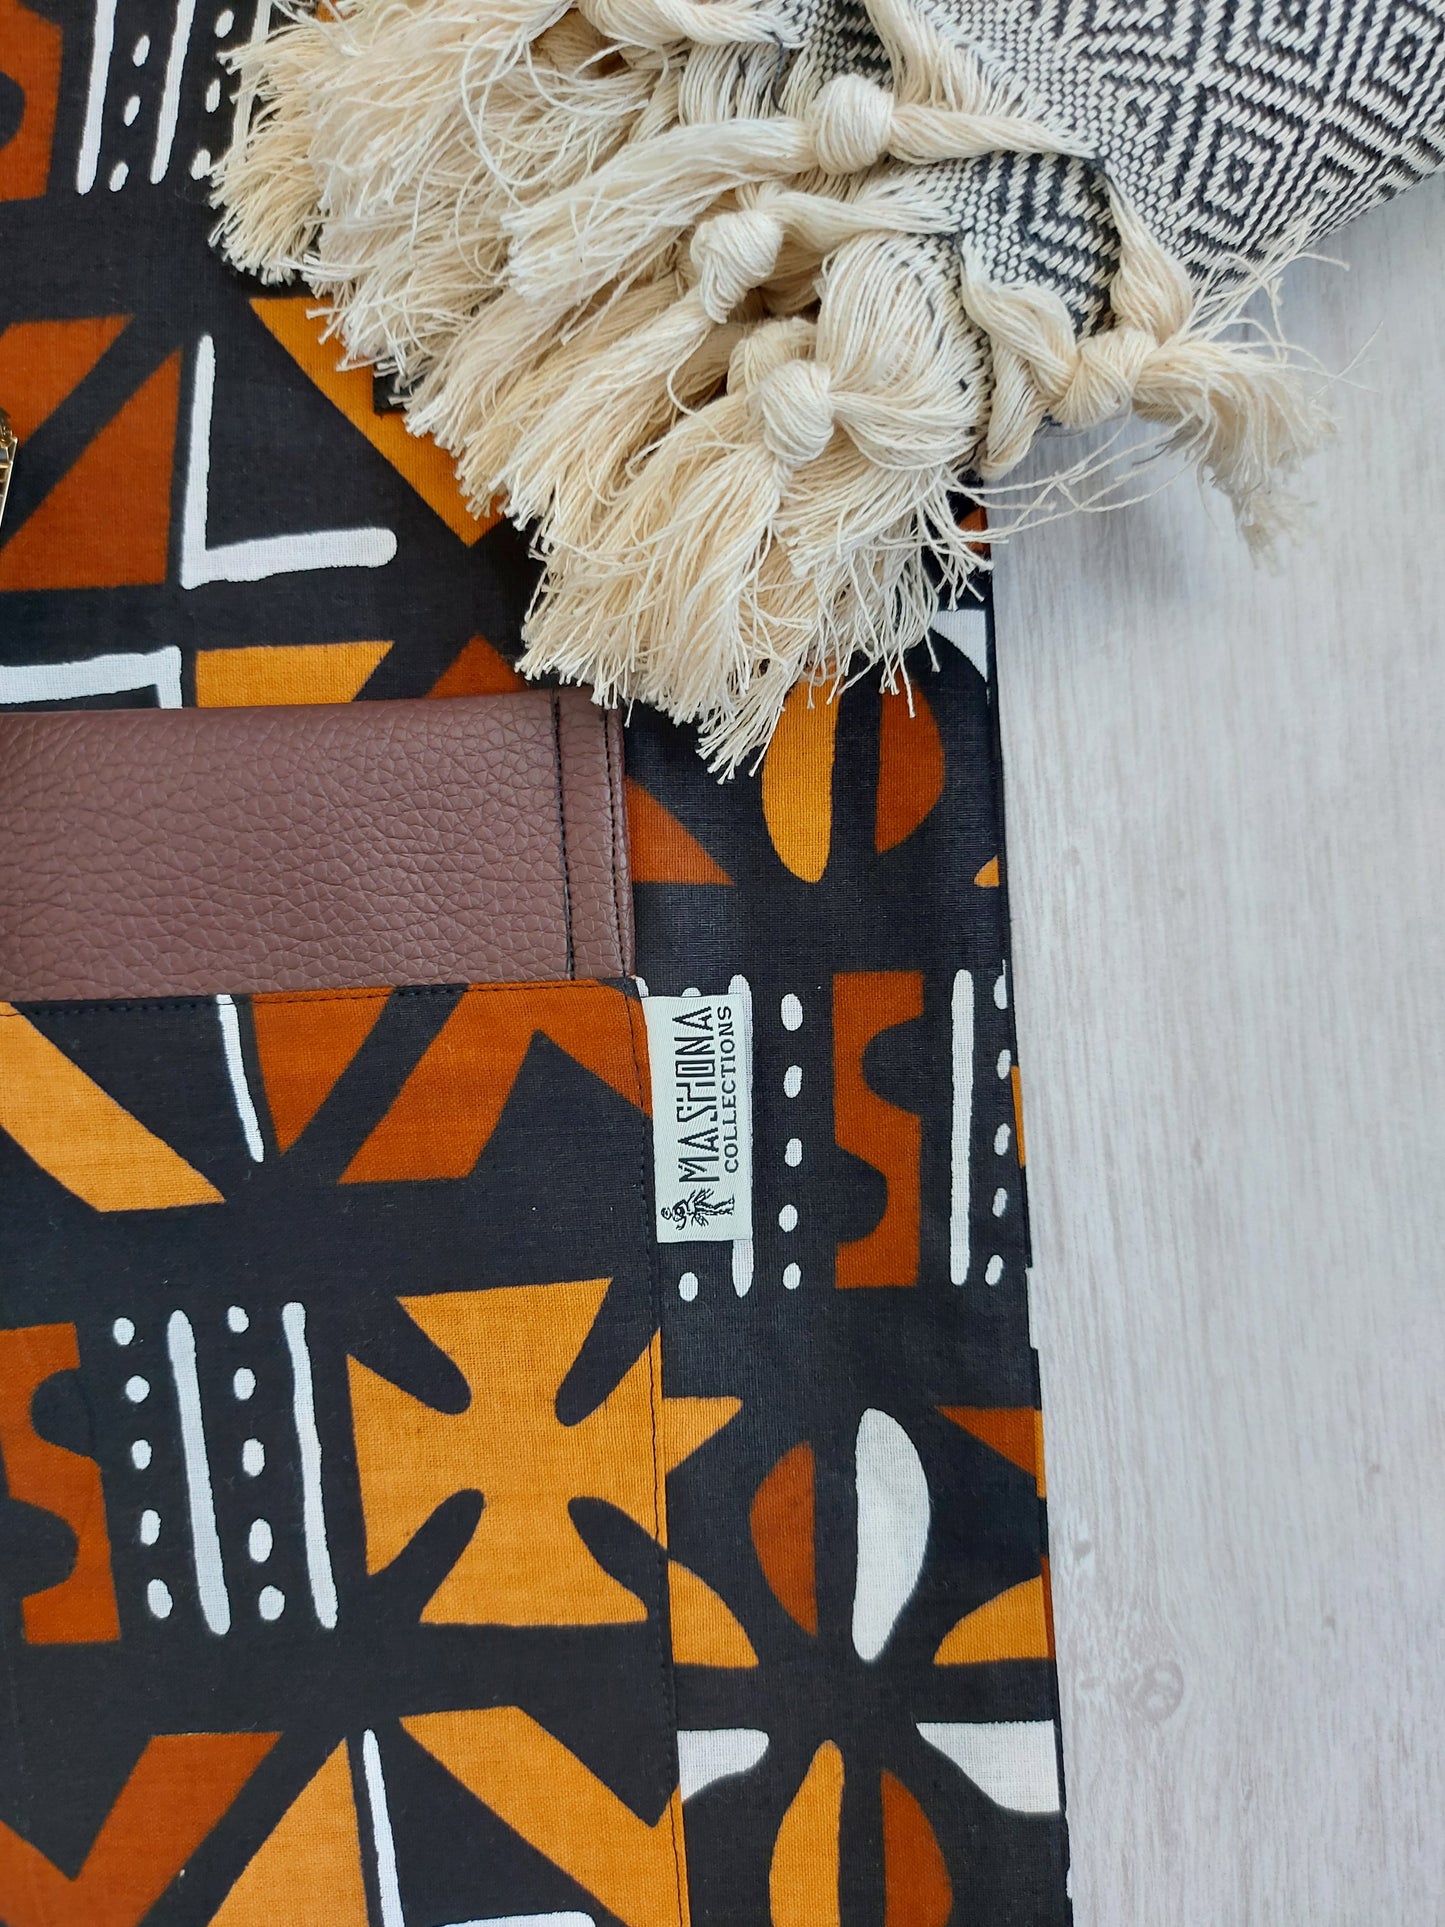 Handmade African Print Tote Bag | Beach Bag | Shopping Bag | Vegan Leather Detail